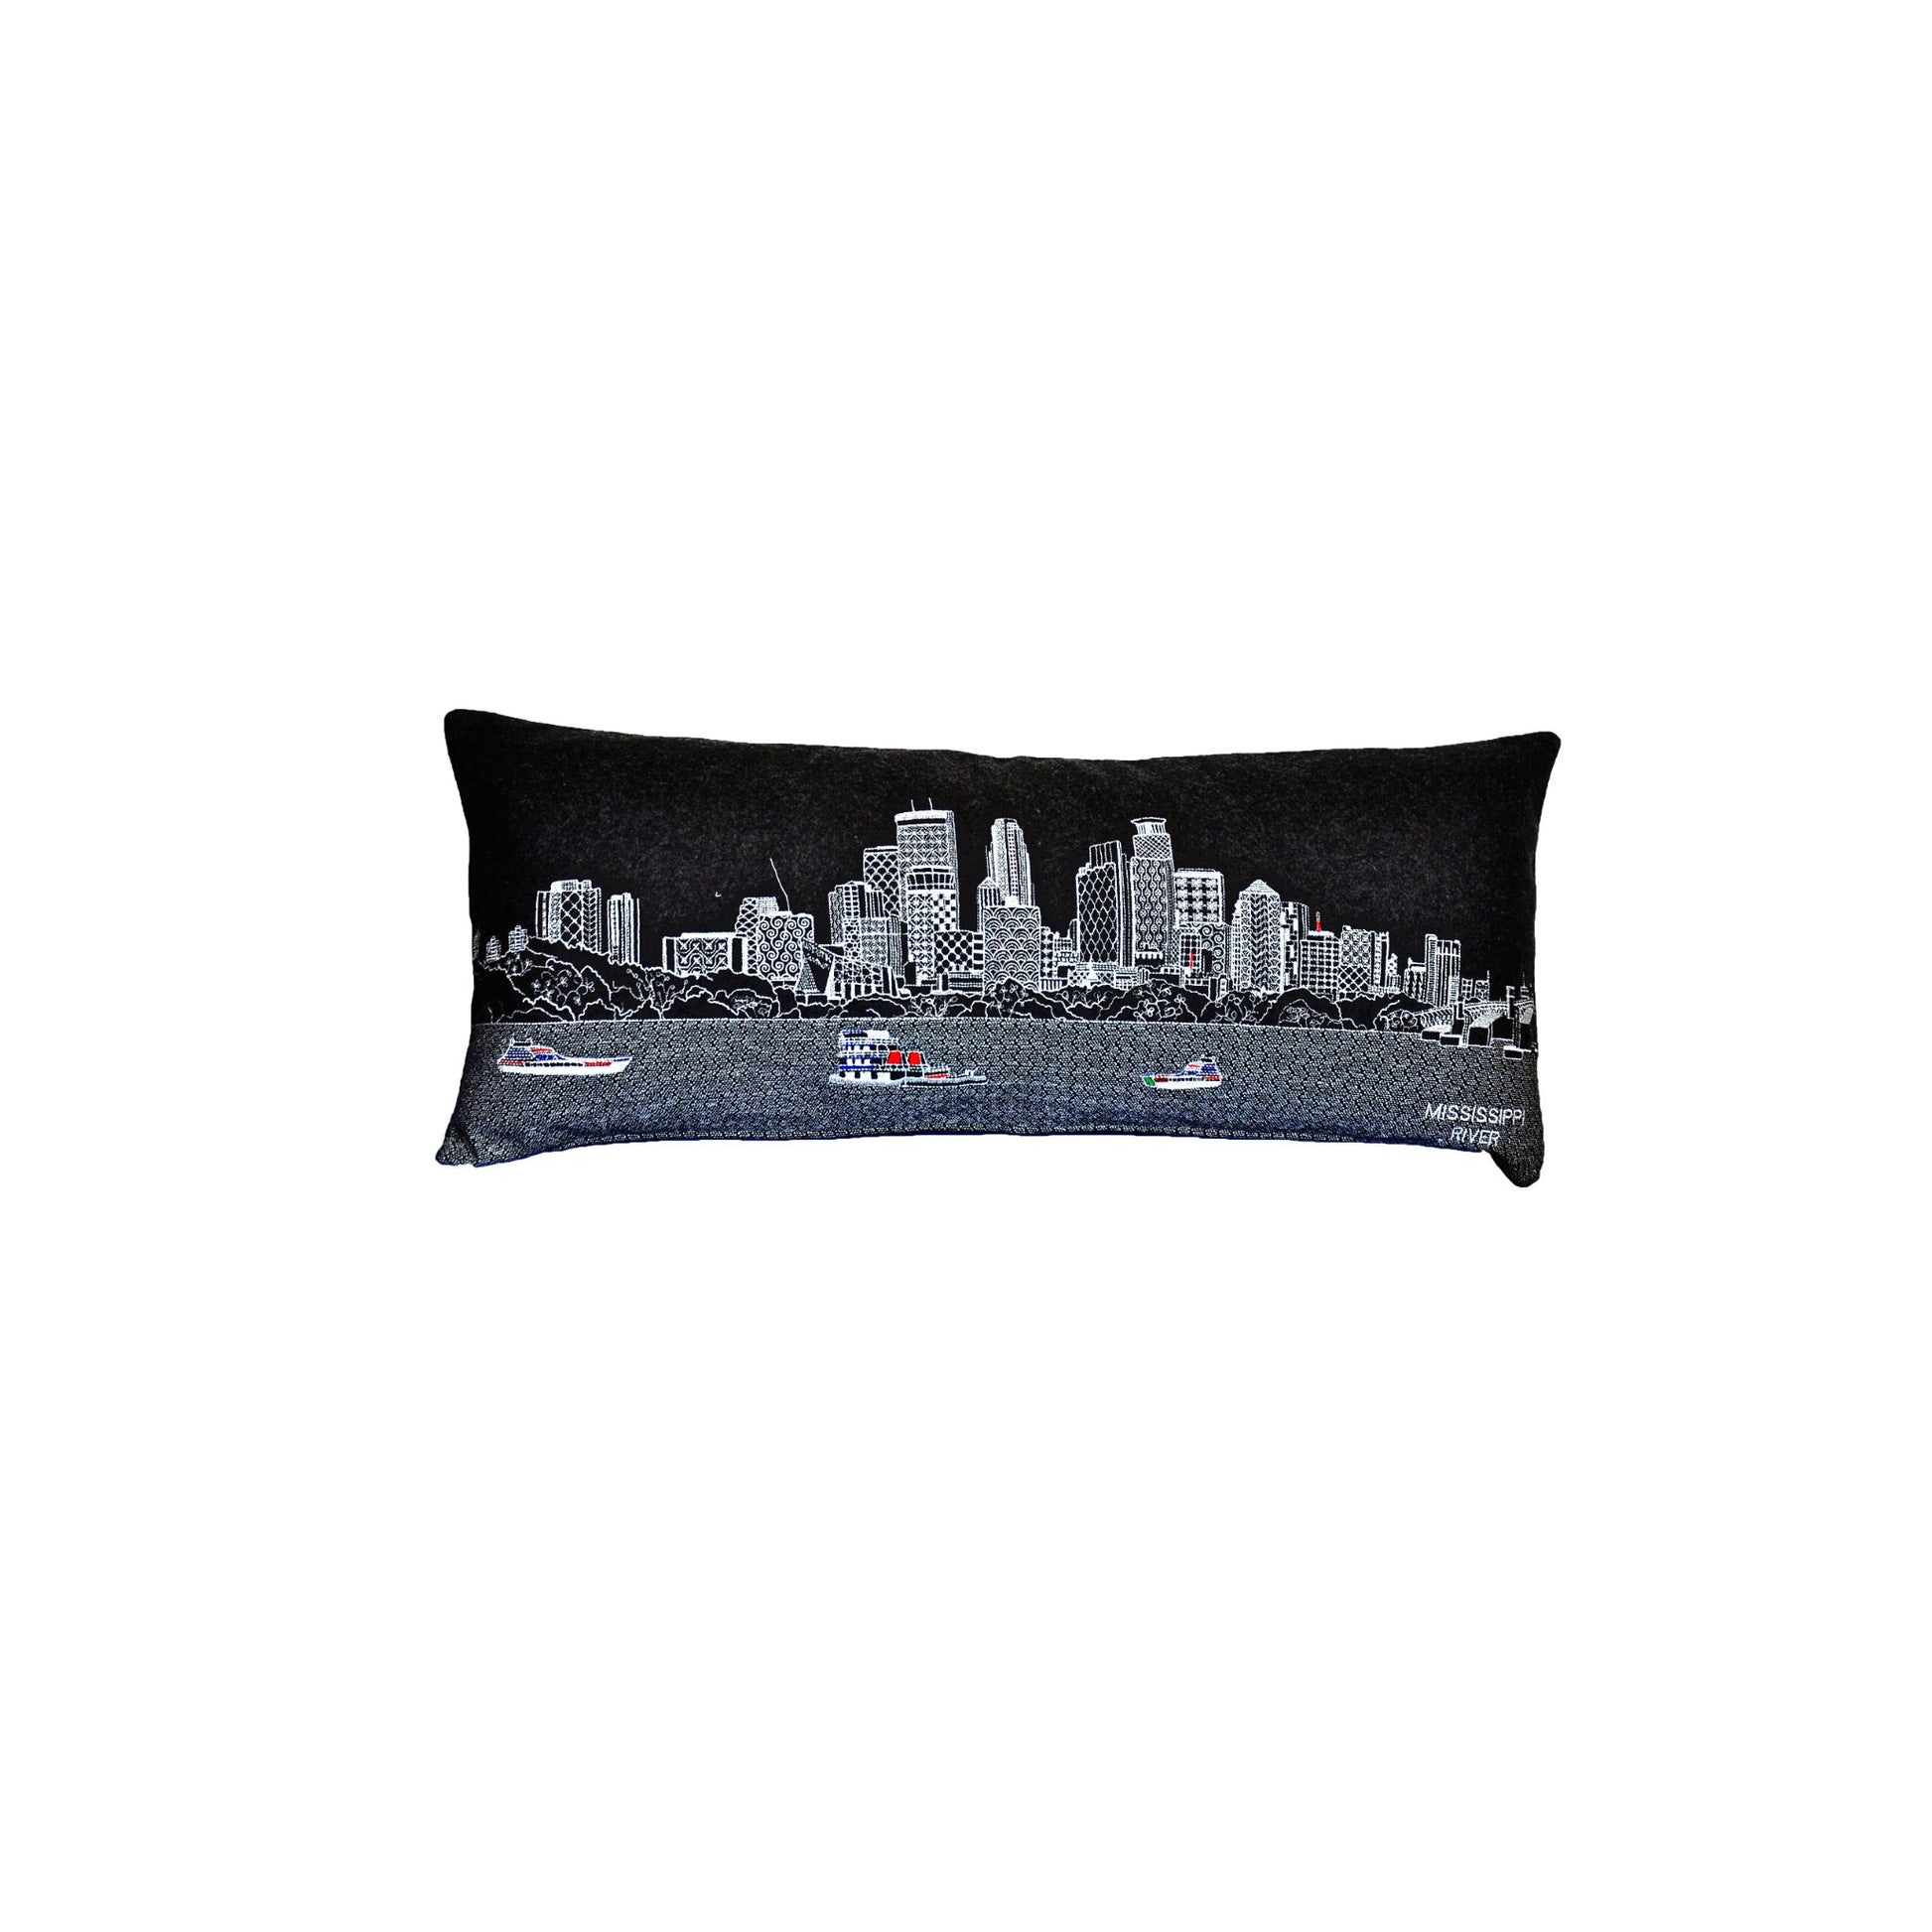 Minneapolis Queen Night Pillow